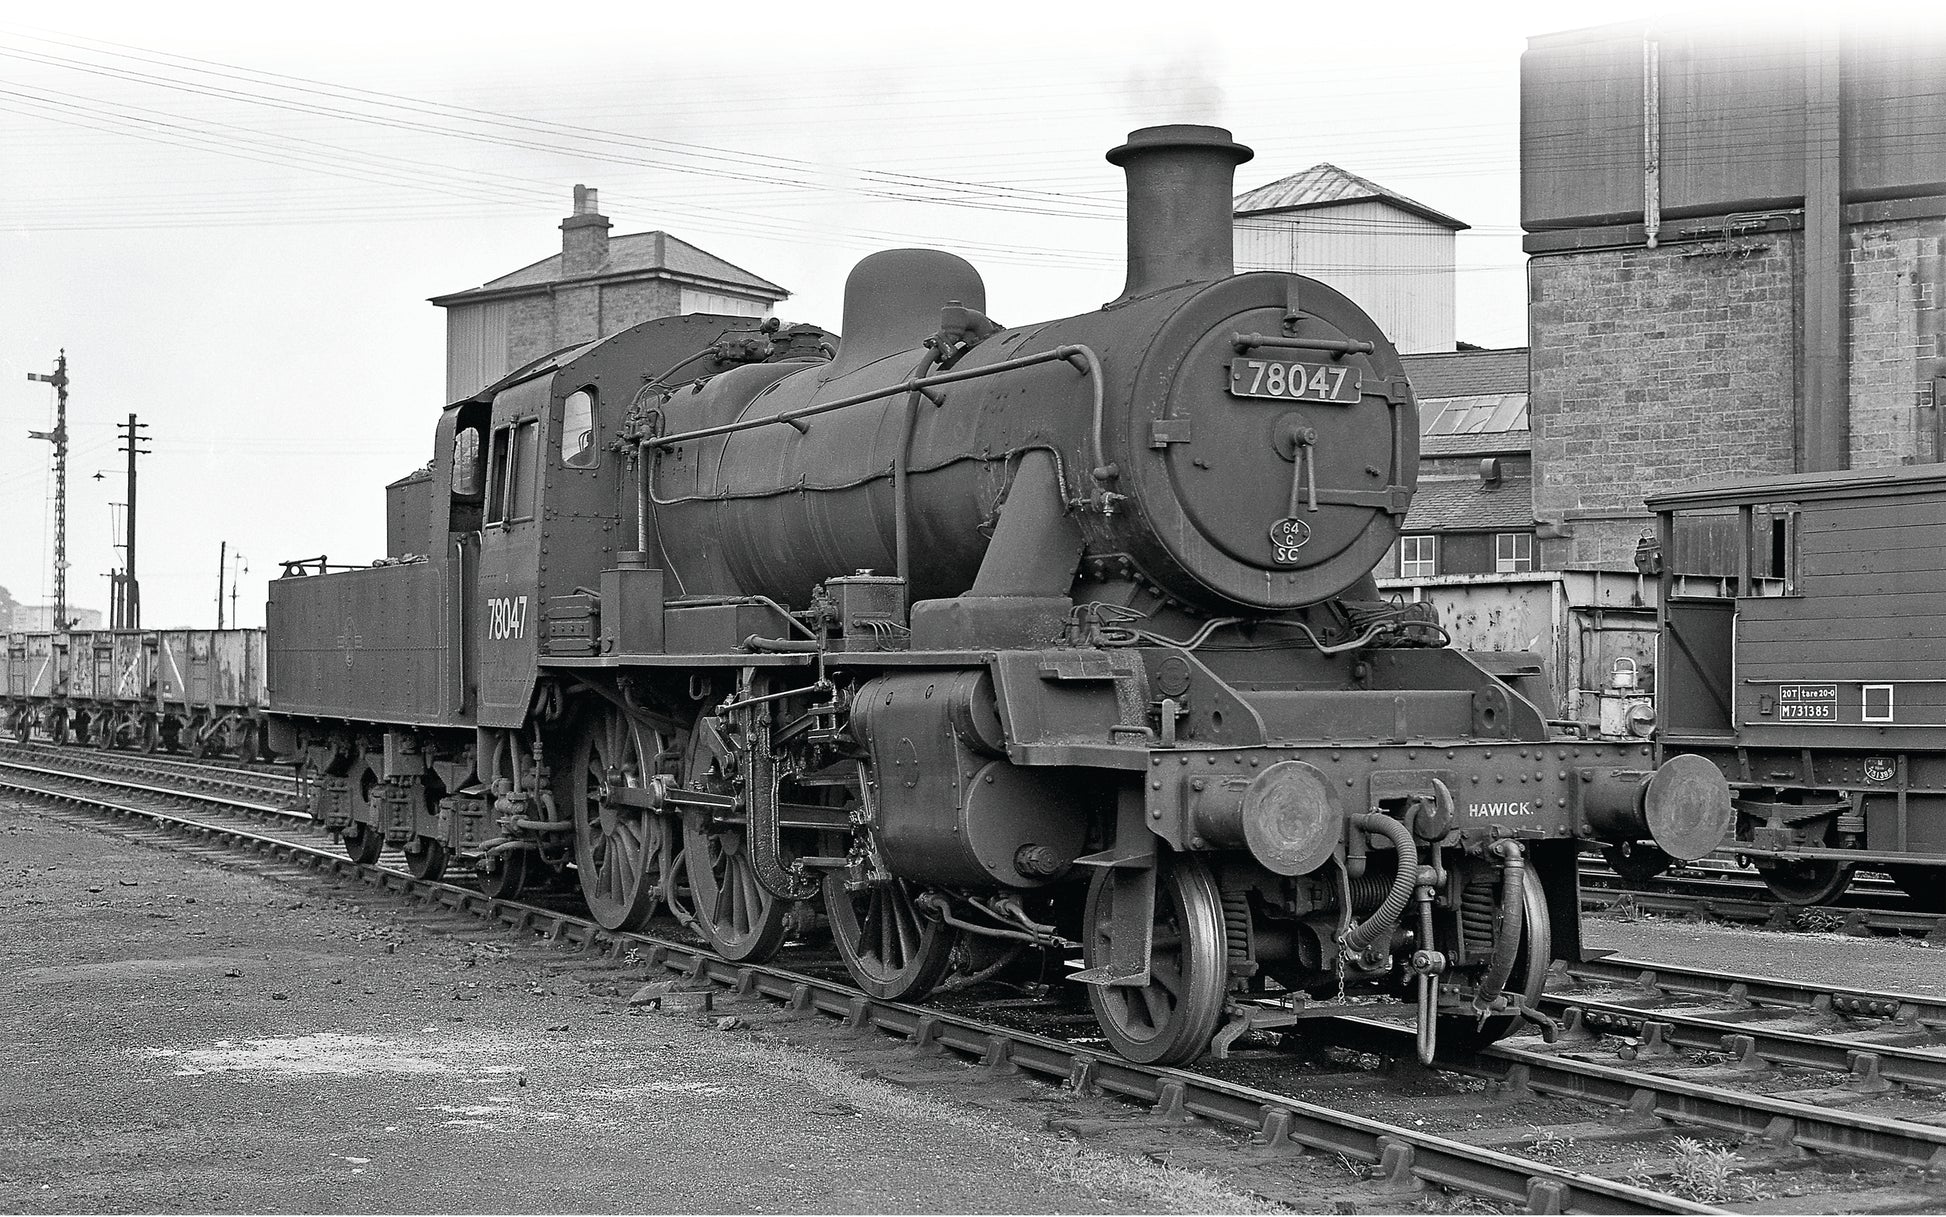 SALE - Hornby R3839 BR, Standard 2MT, 2-6-0, 78000 - Era 5 Steam 5 Late British Railways - BR Green 1956-1968 - Chester Model Centre